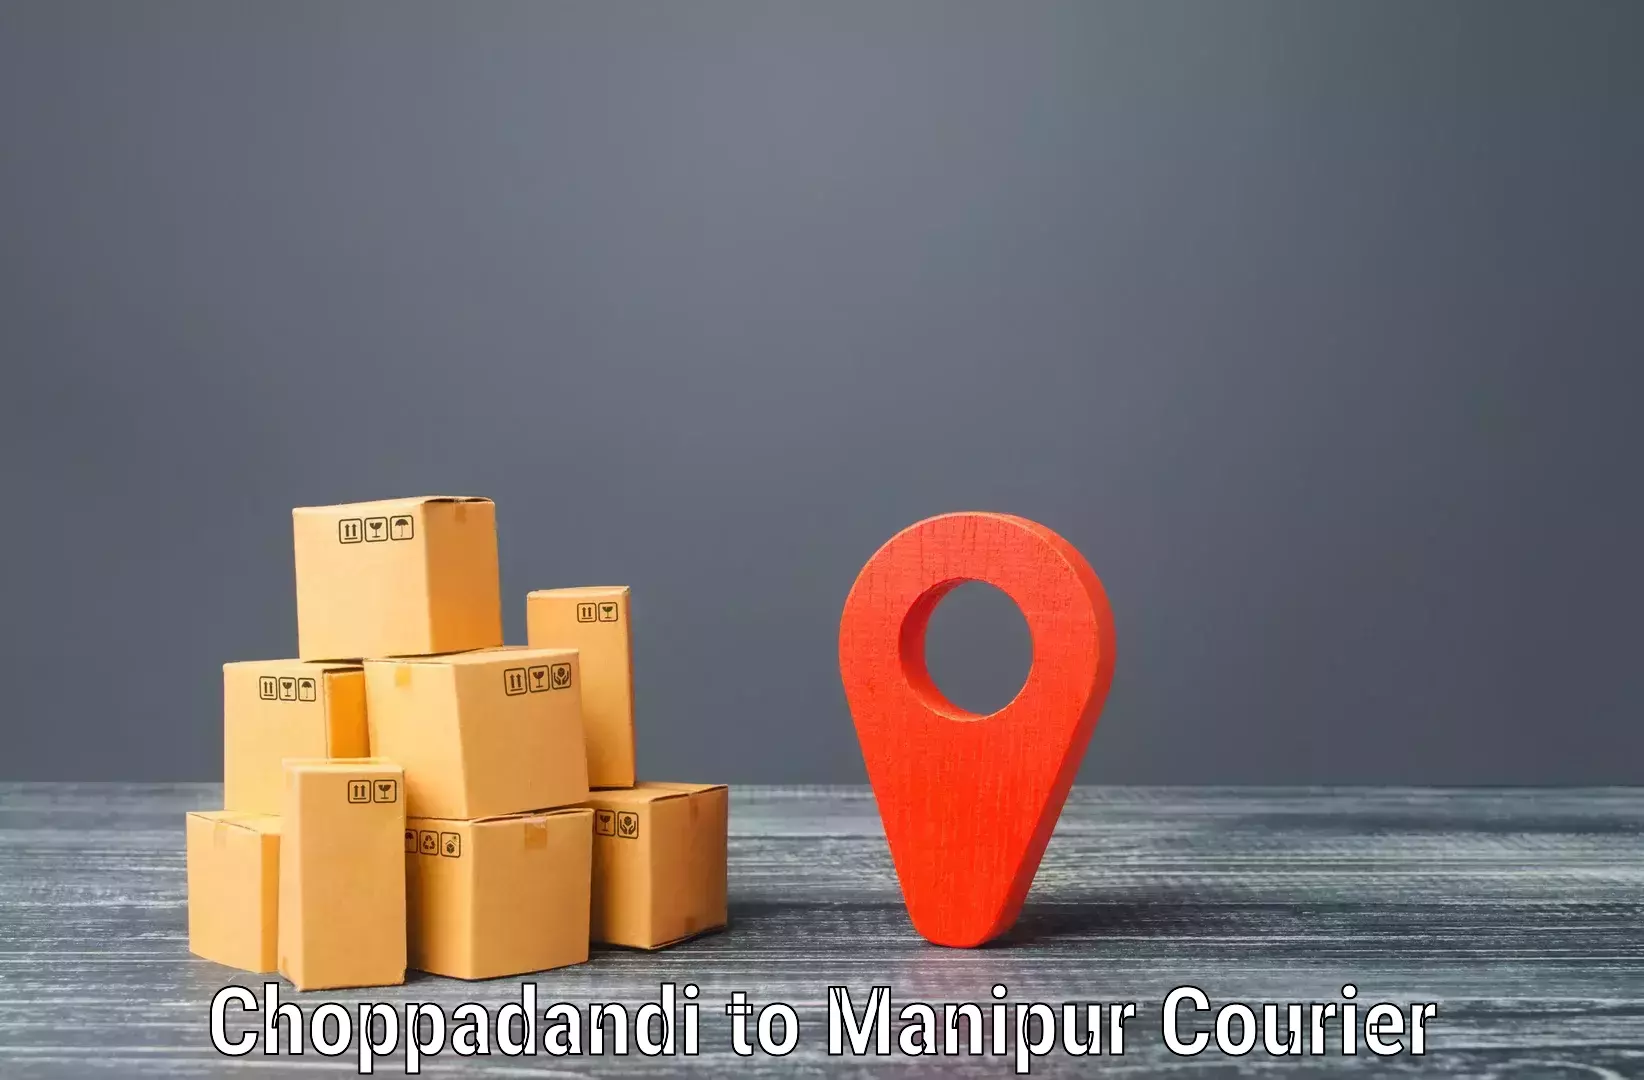 User-friendly courier app Choppadandi to Manipur